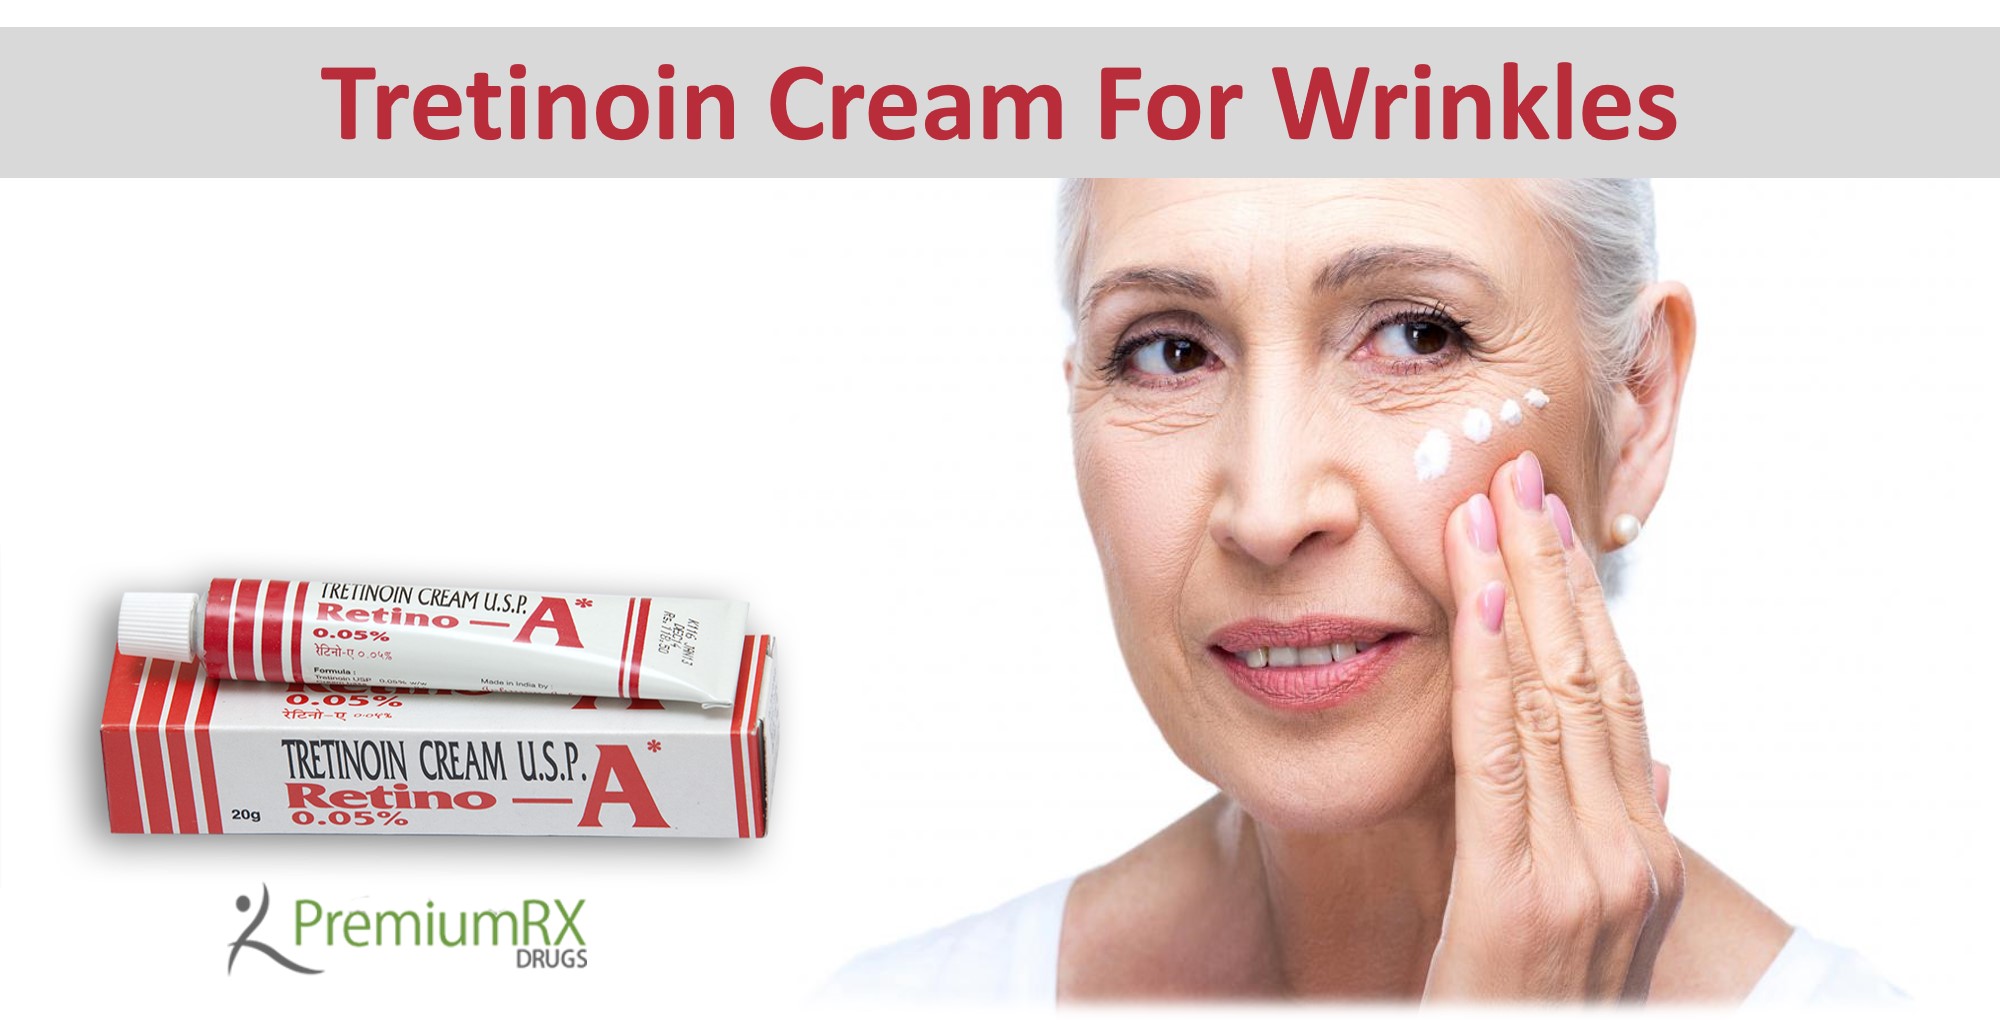 Tretinoin Cream For Wrinkles